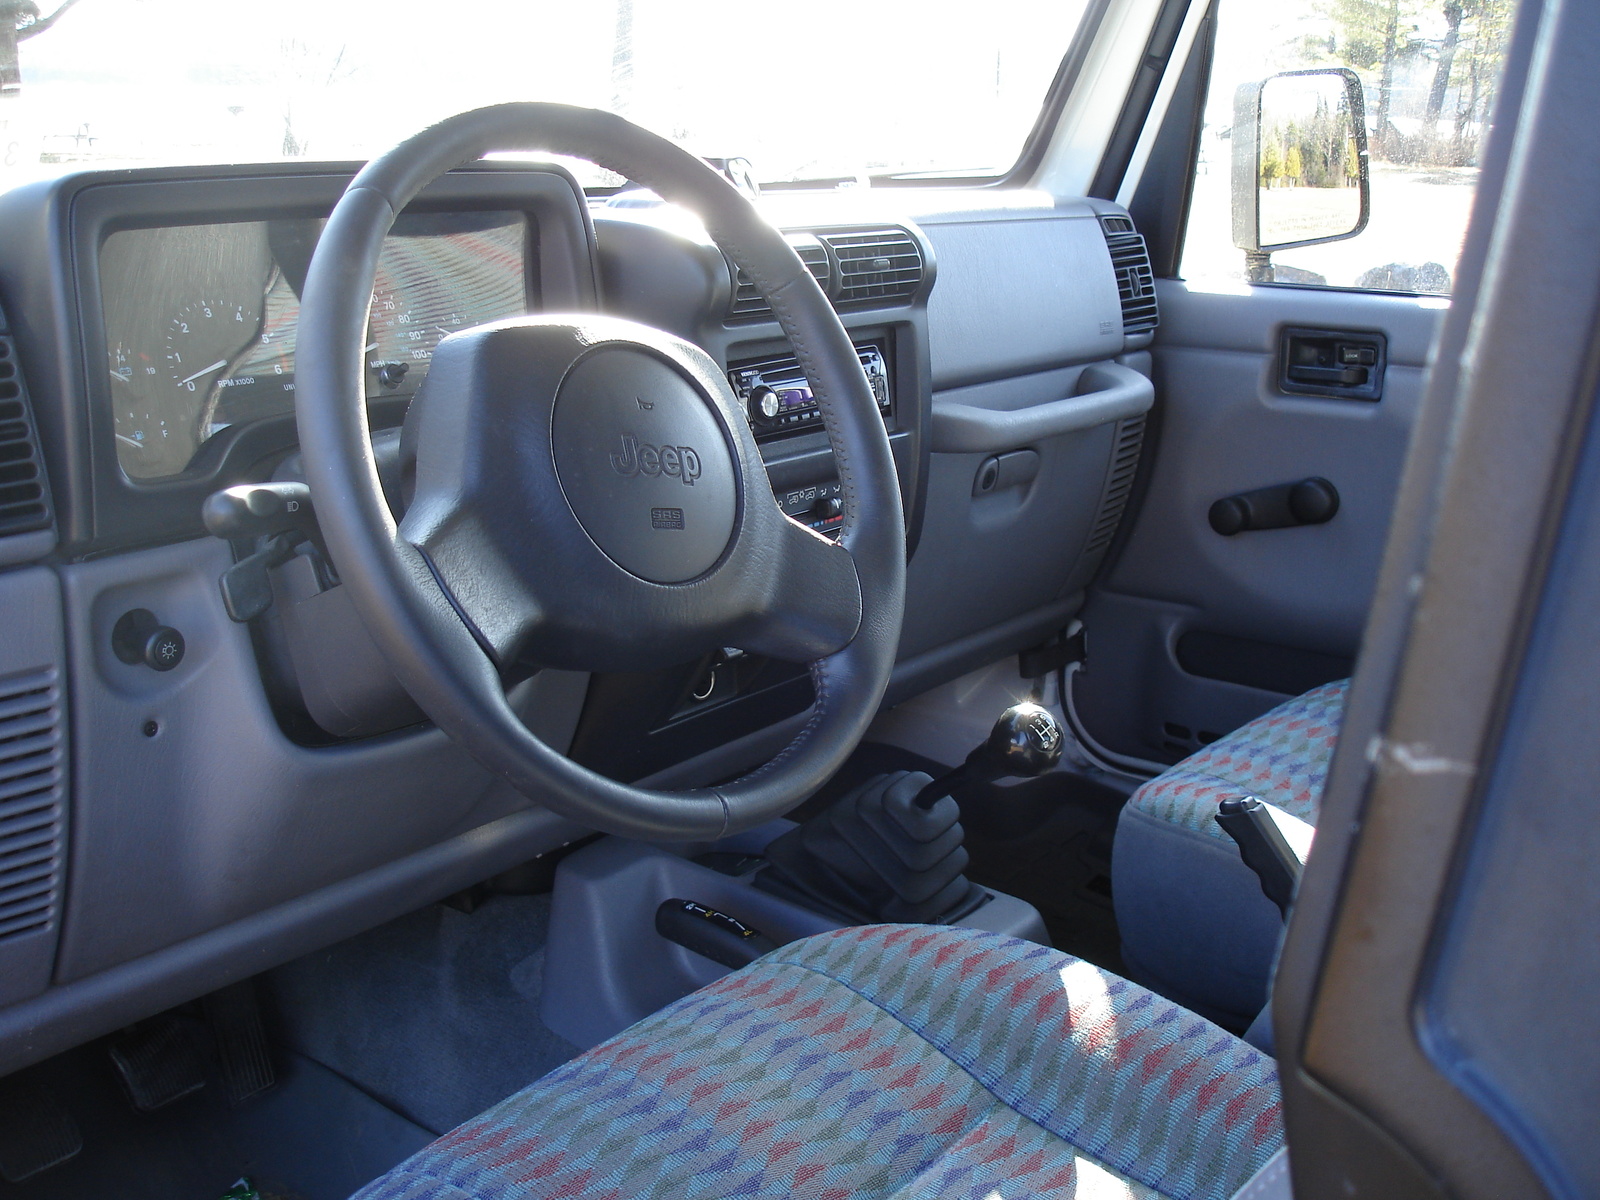 1997 Jeep wrangler sahara fuel economy #4